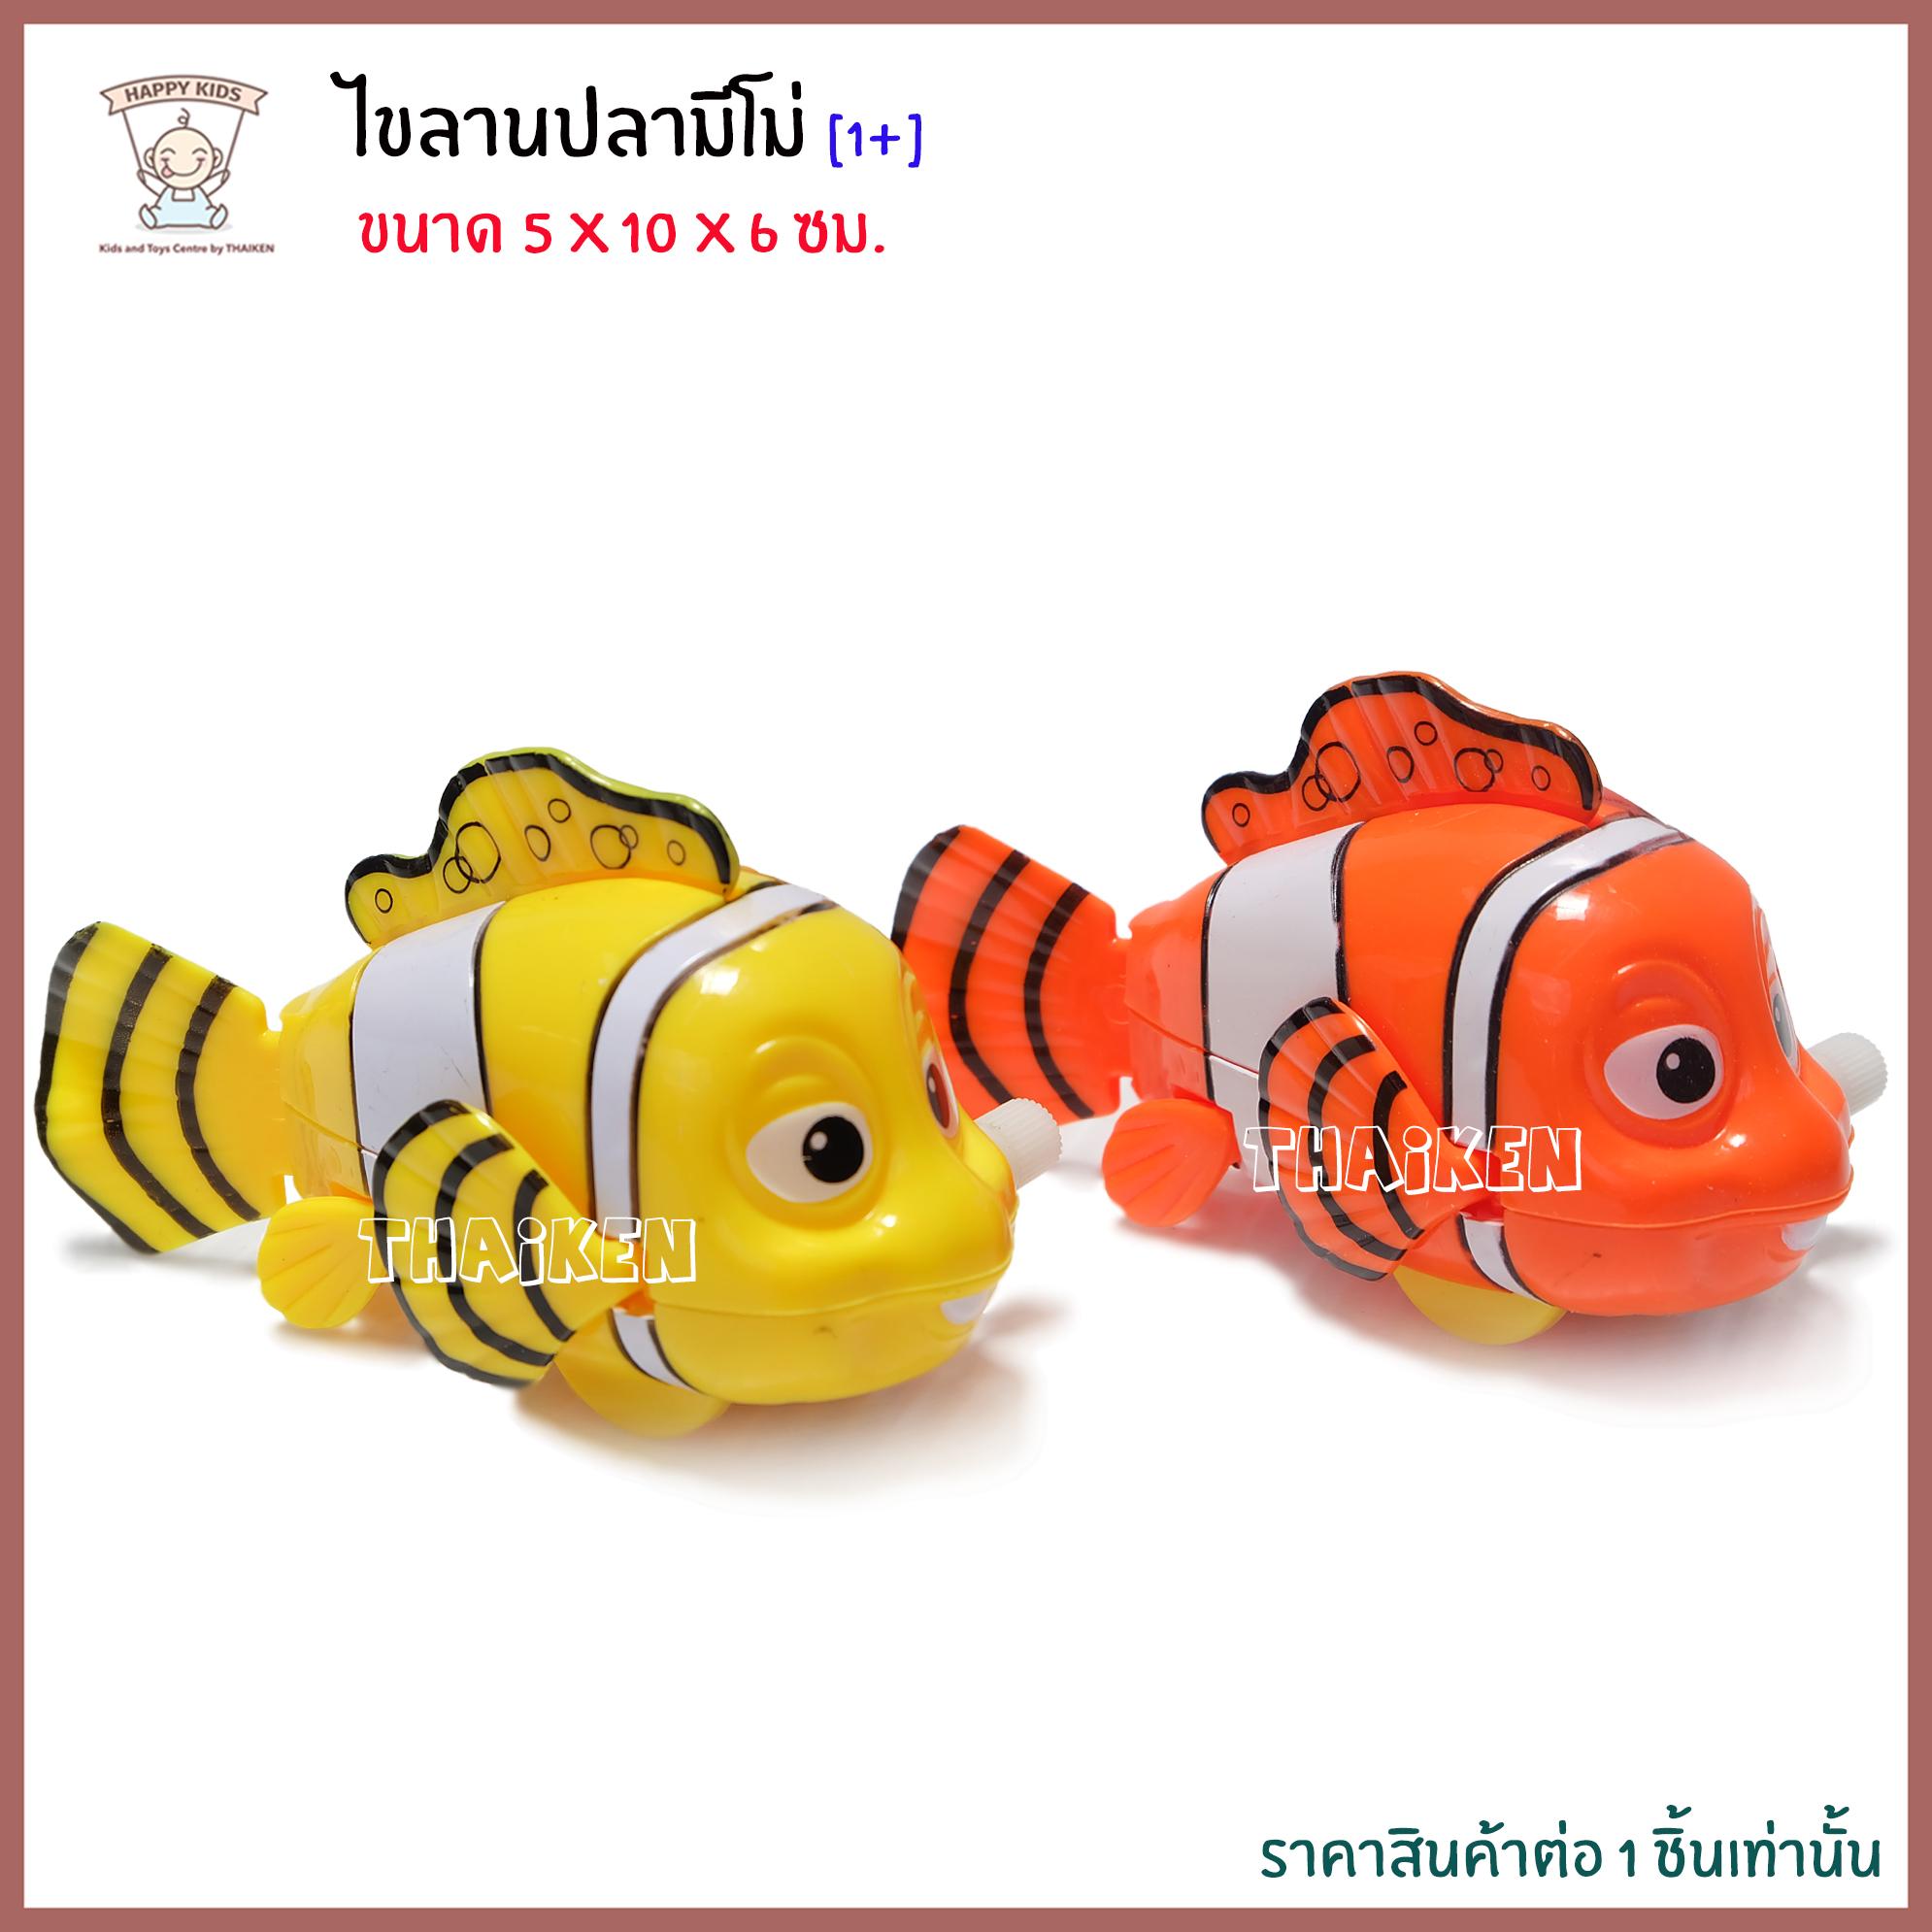 Thaiken ไขลานปลามีโม่ 04669